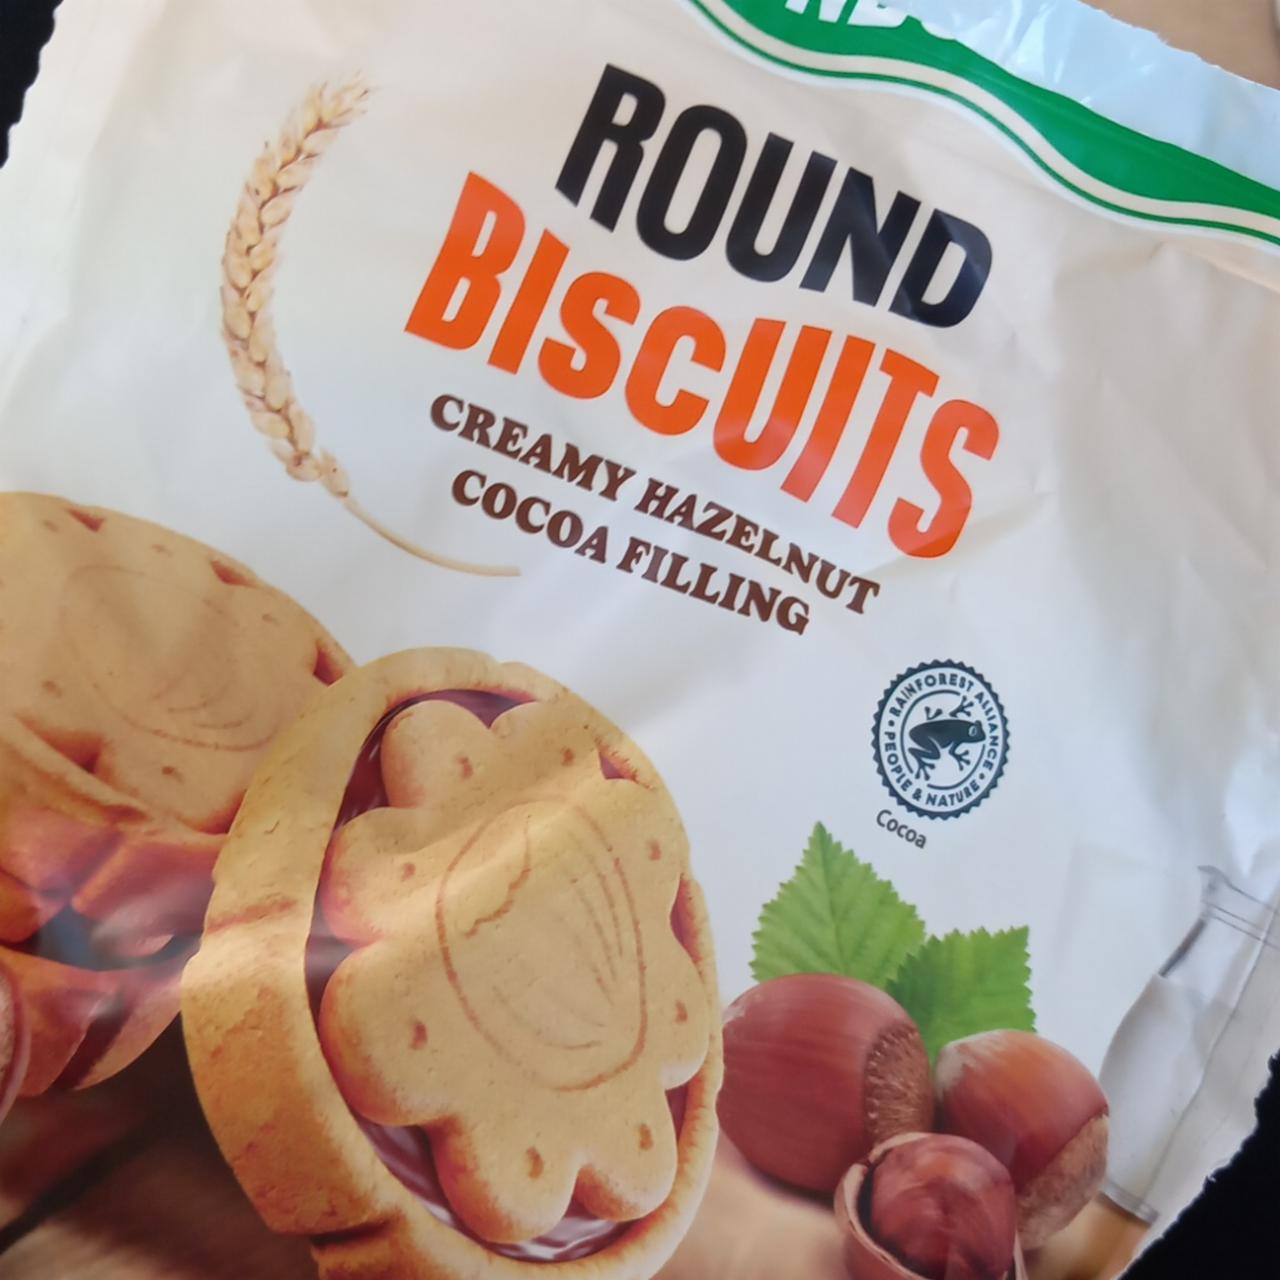 Zdjęcia - Round Biscuits creamy hazelnut cocoa filling Rondo's